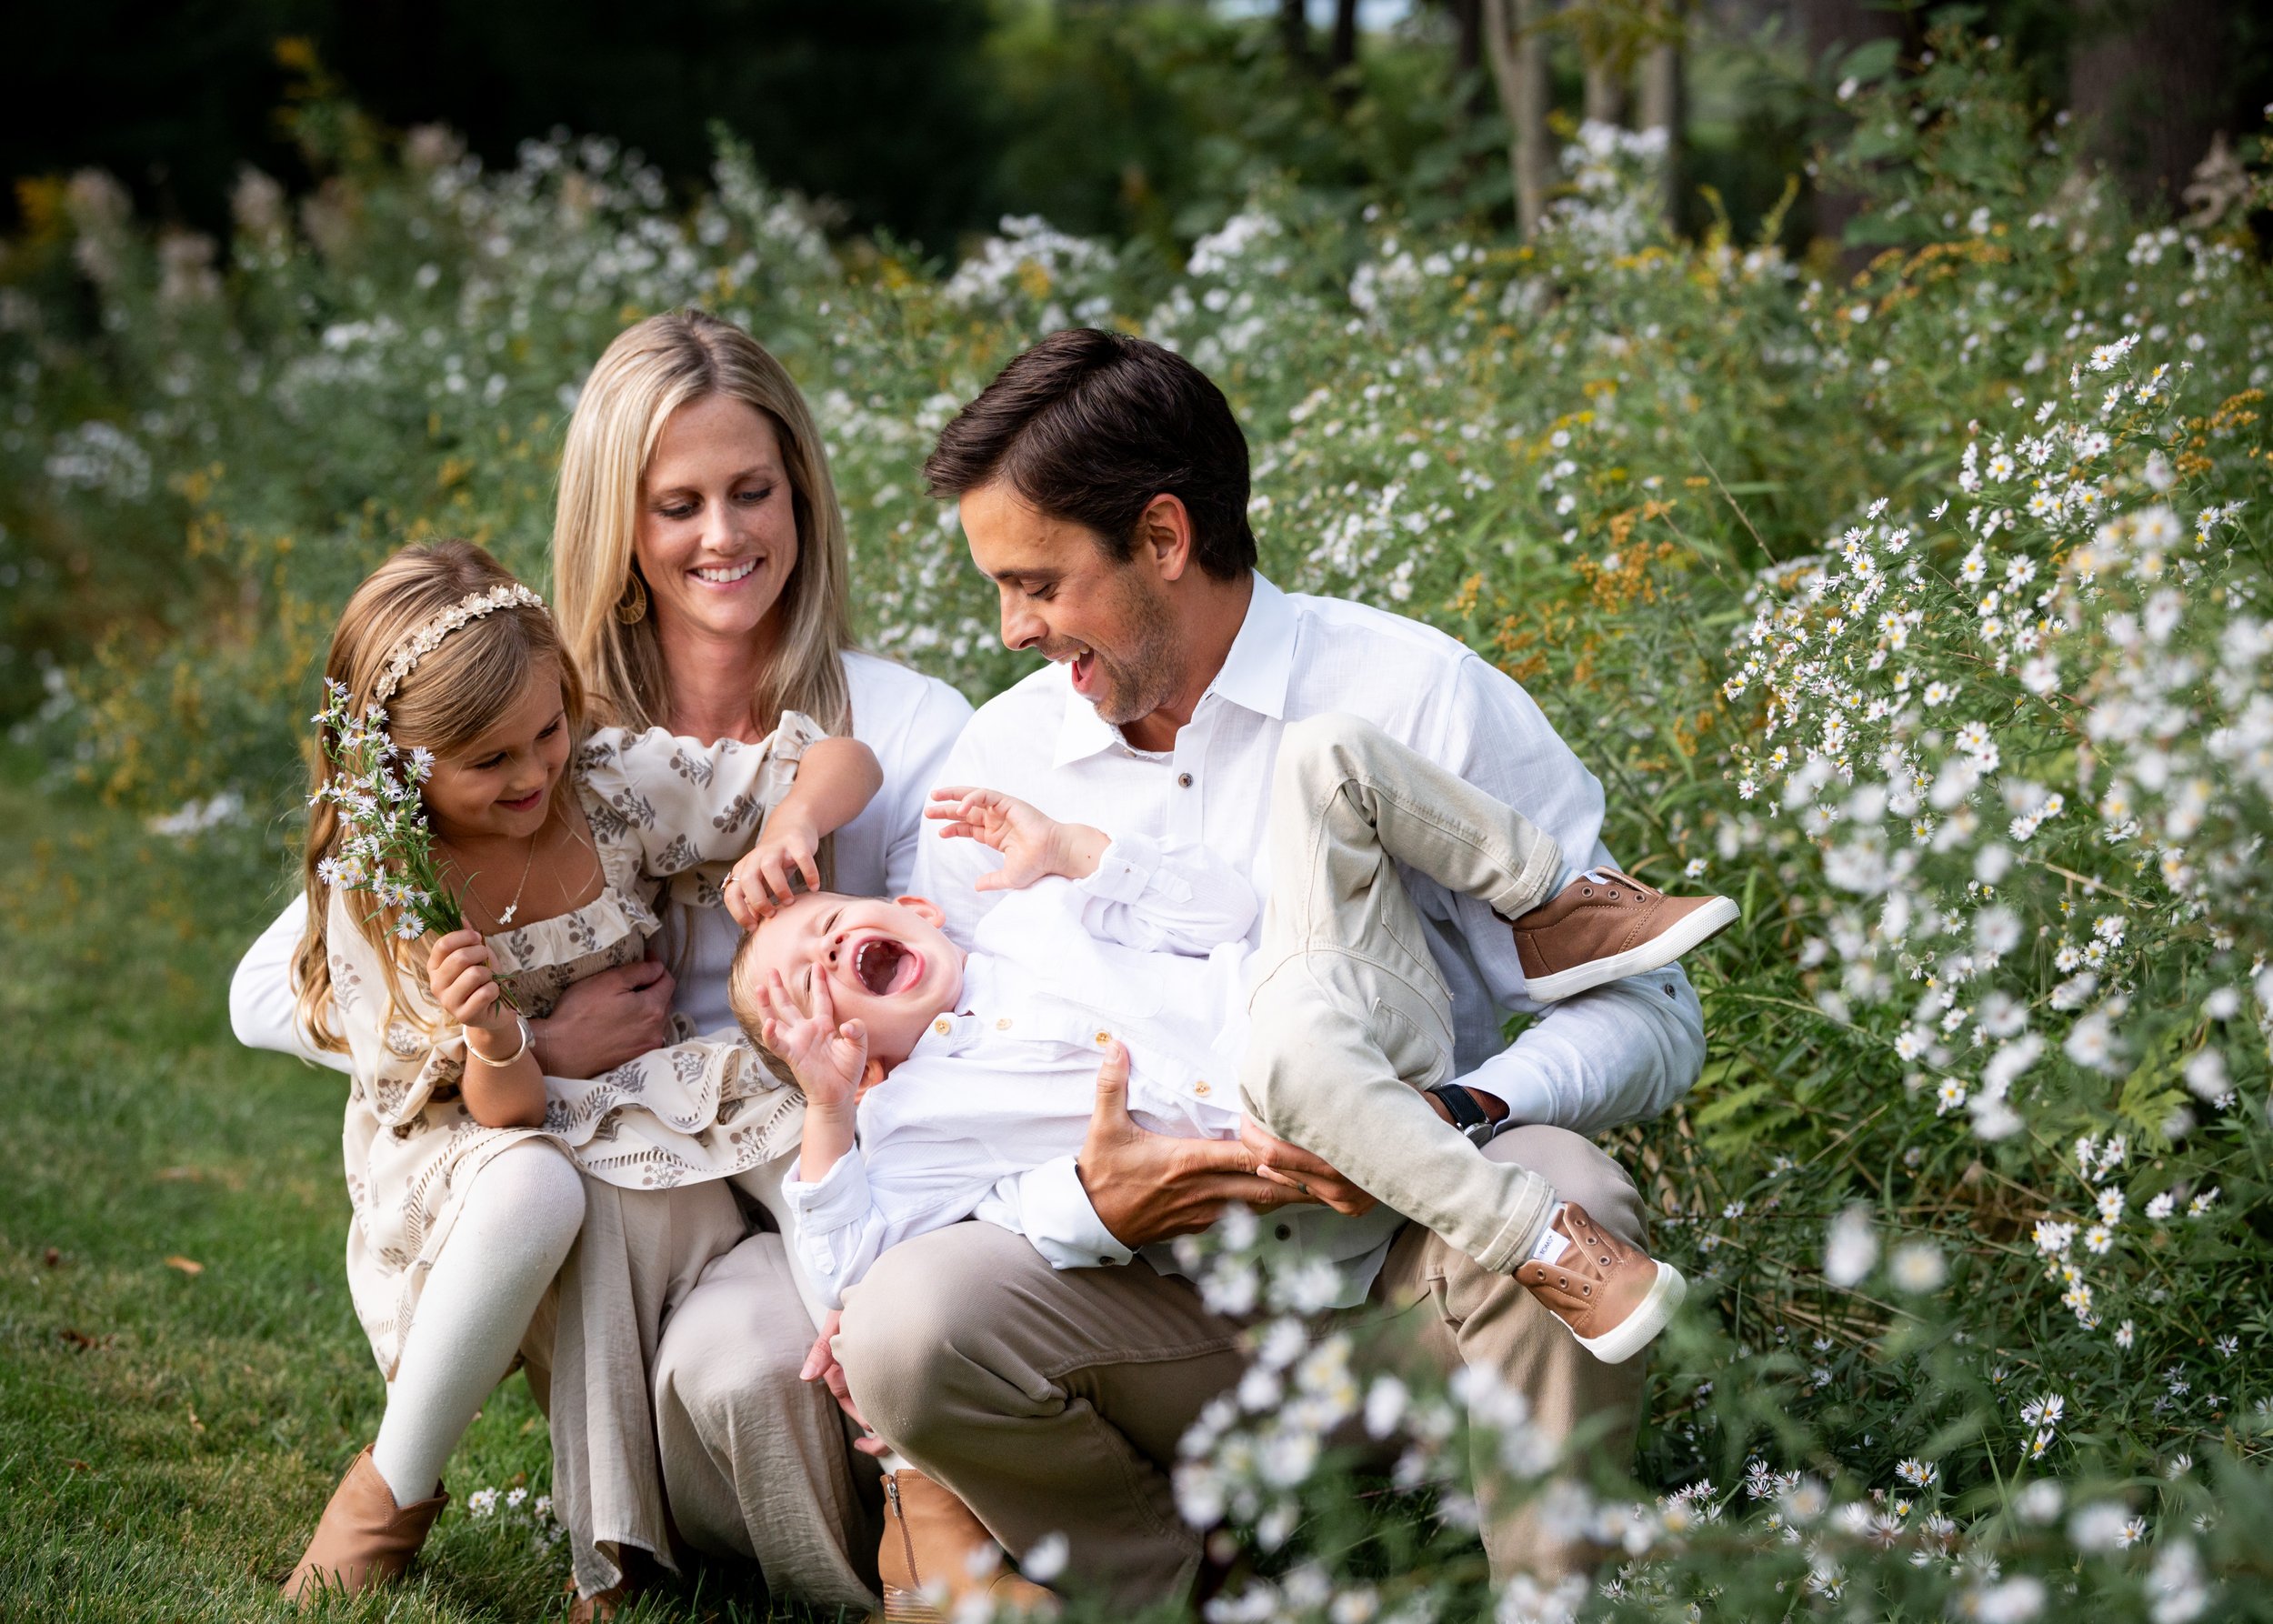 lindsay murphy photography | portland maine family photographer | playful wildflower fields family photo.jpg